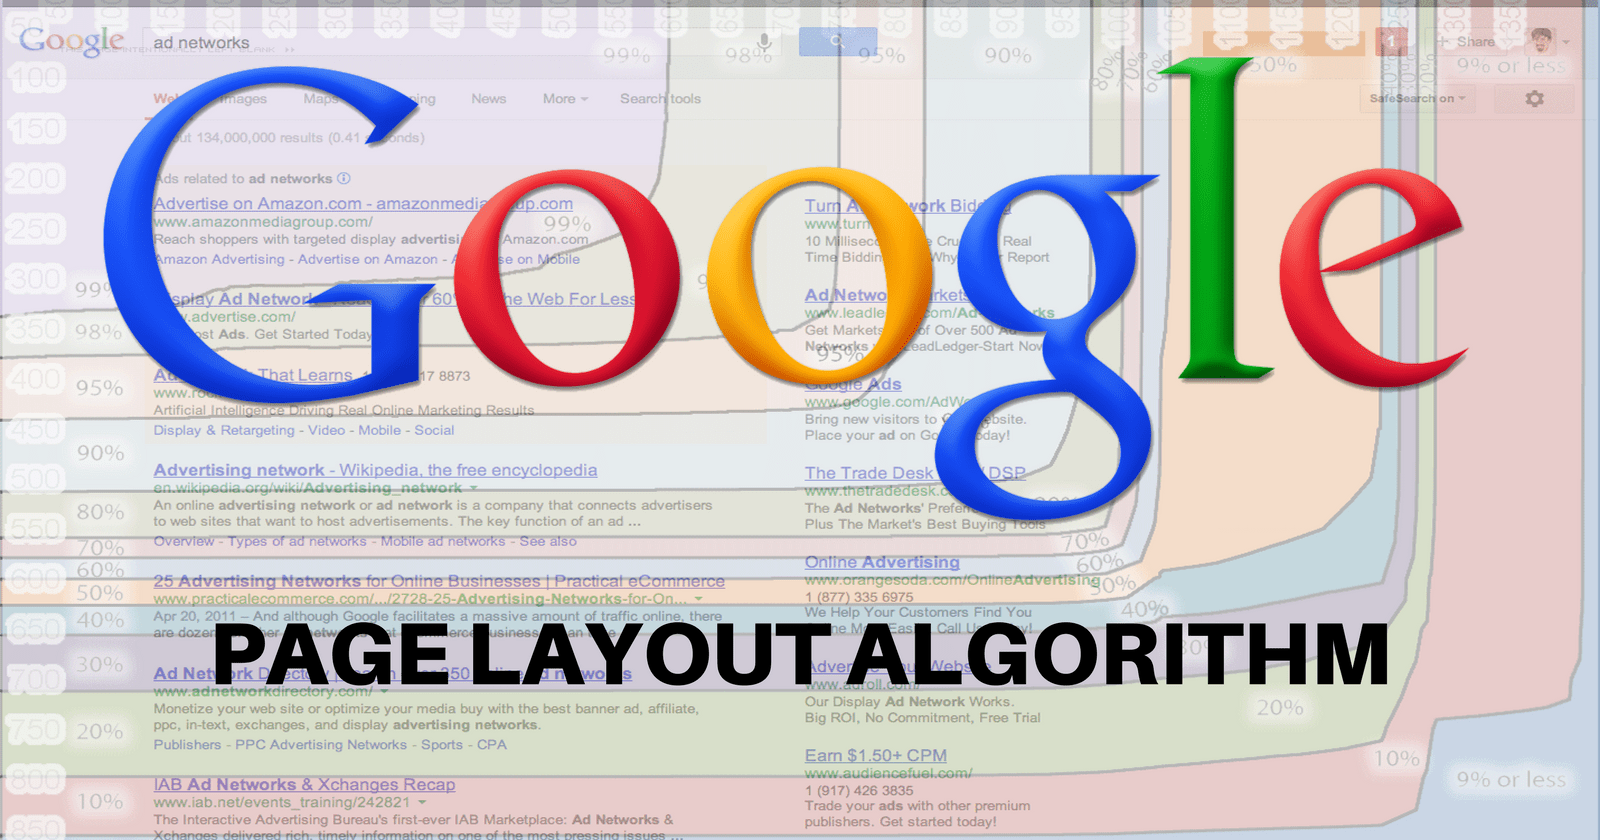 Google page layout algorithm